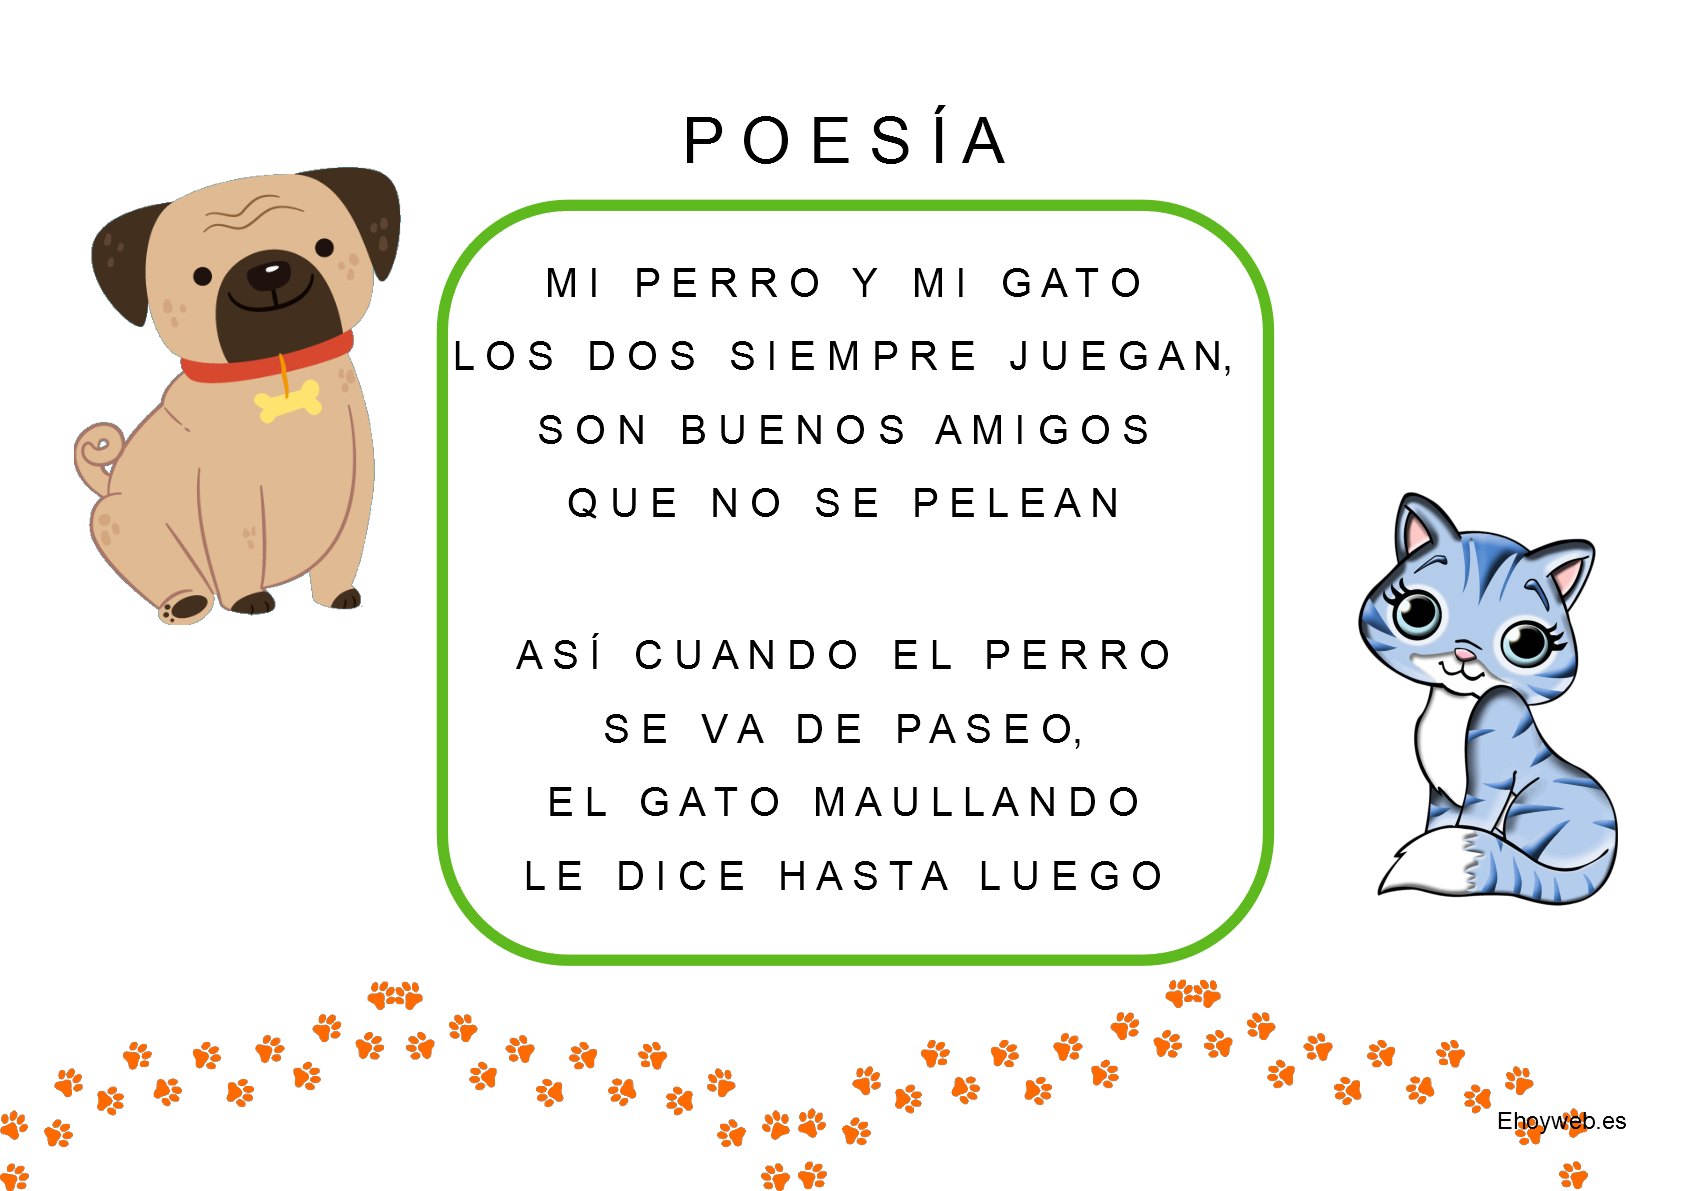 Poesia mascotas